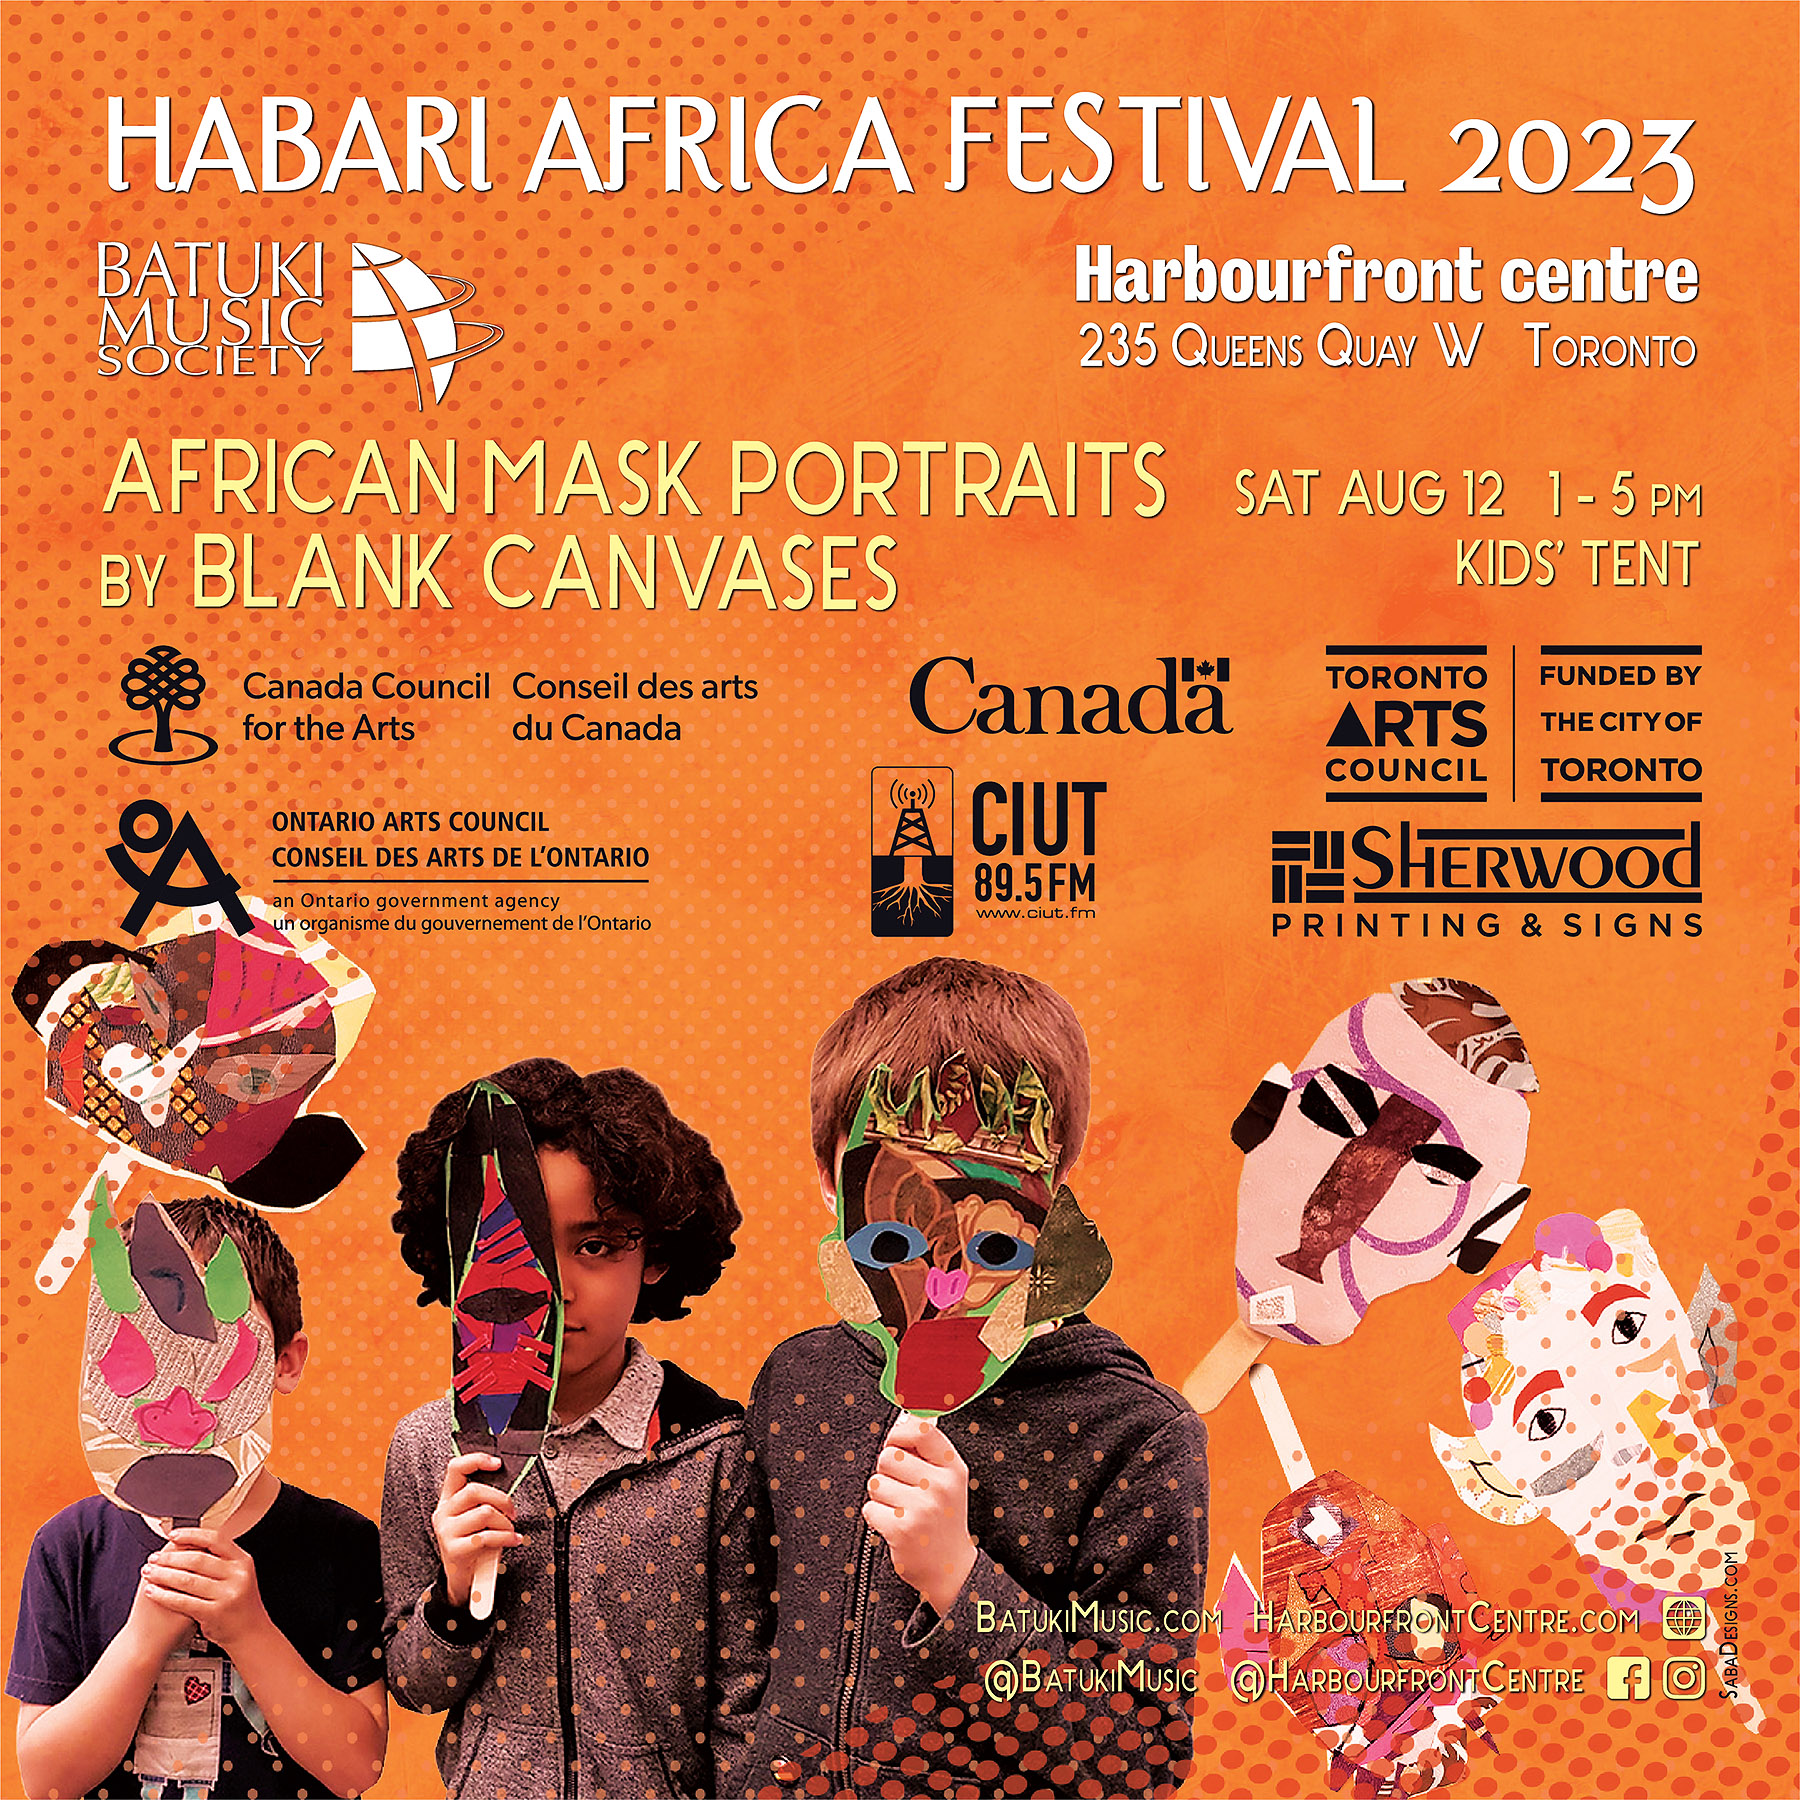 Habari Africa Live Festival 2023 by Batuki Music Society Blank Canvases